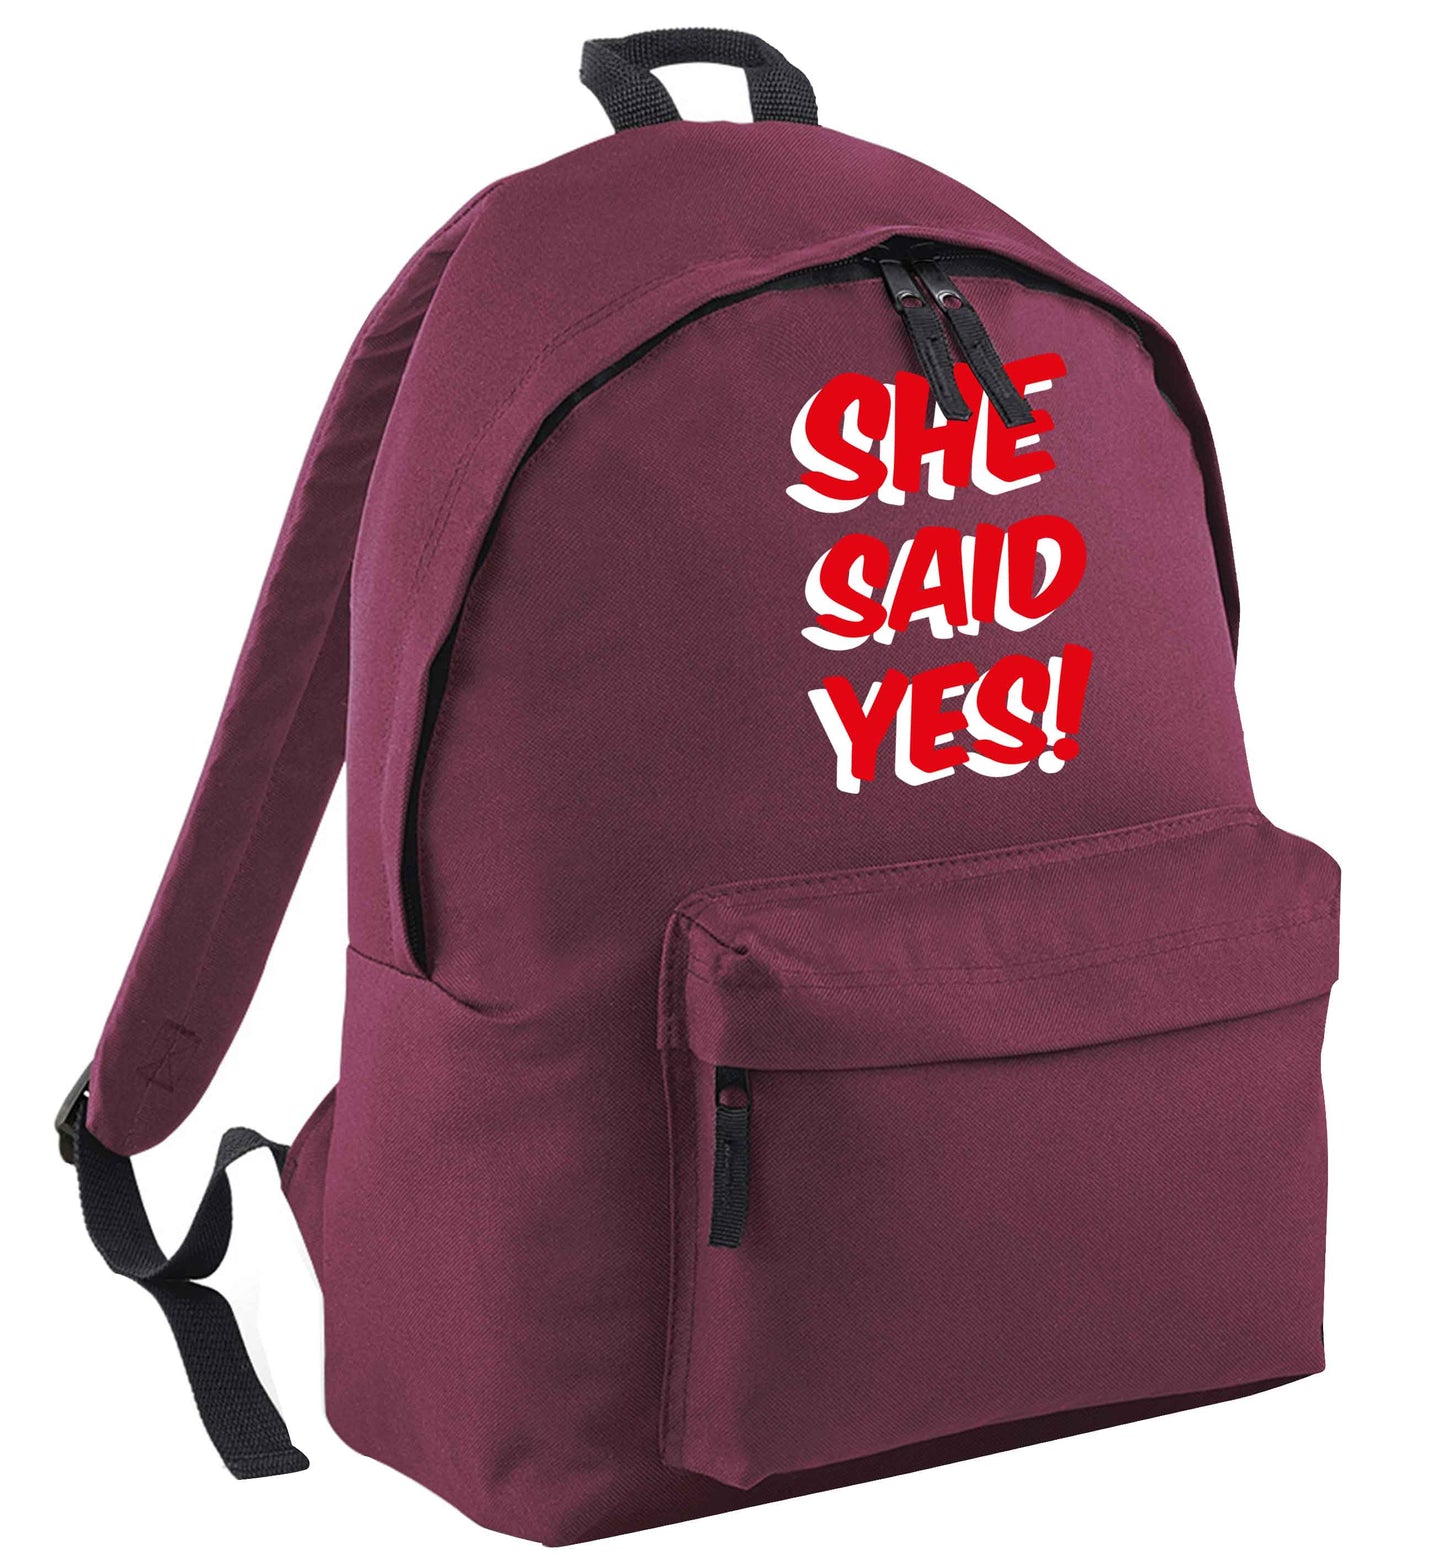 She said yes maroon adults backpack